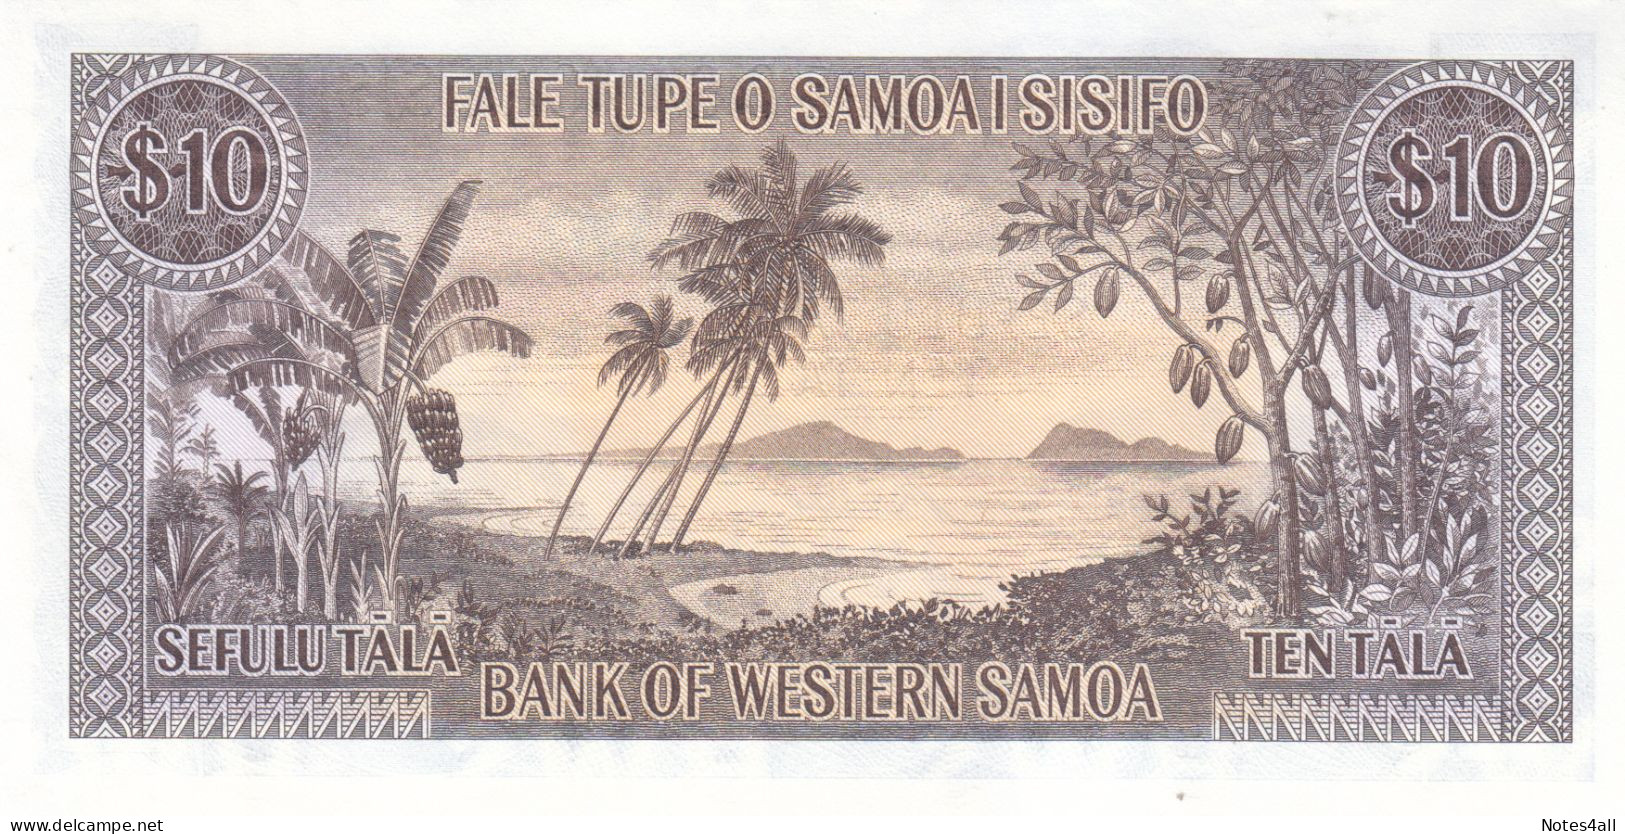 WESTERN SAMOA 10 TALA 1967 2020 P-18 UNC - Samoa